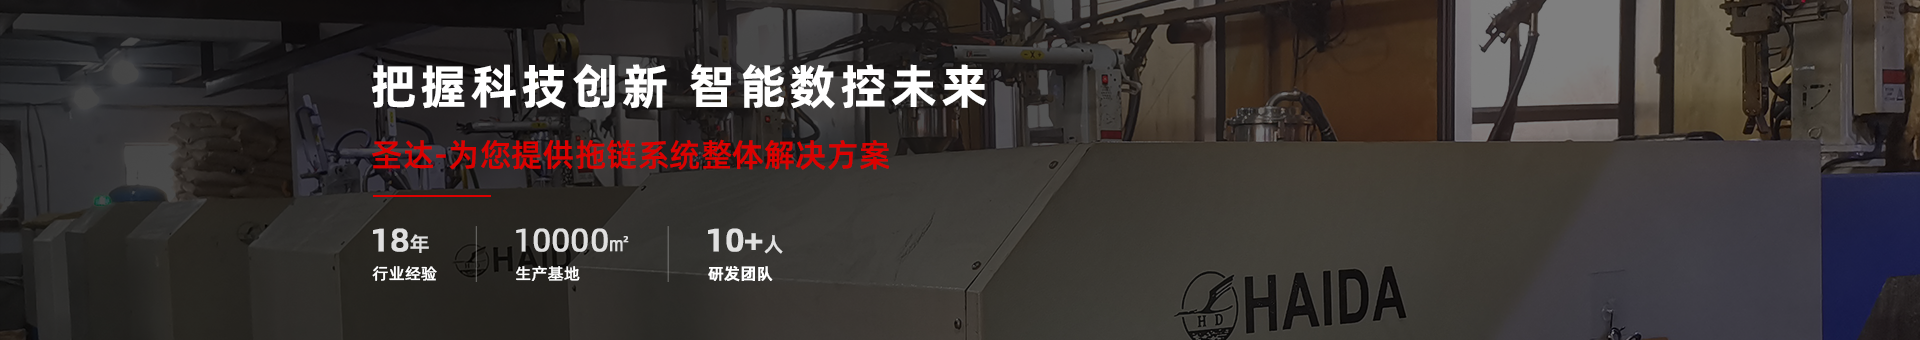 nba中国官方网站机械banner